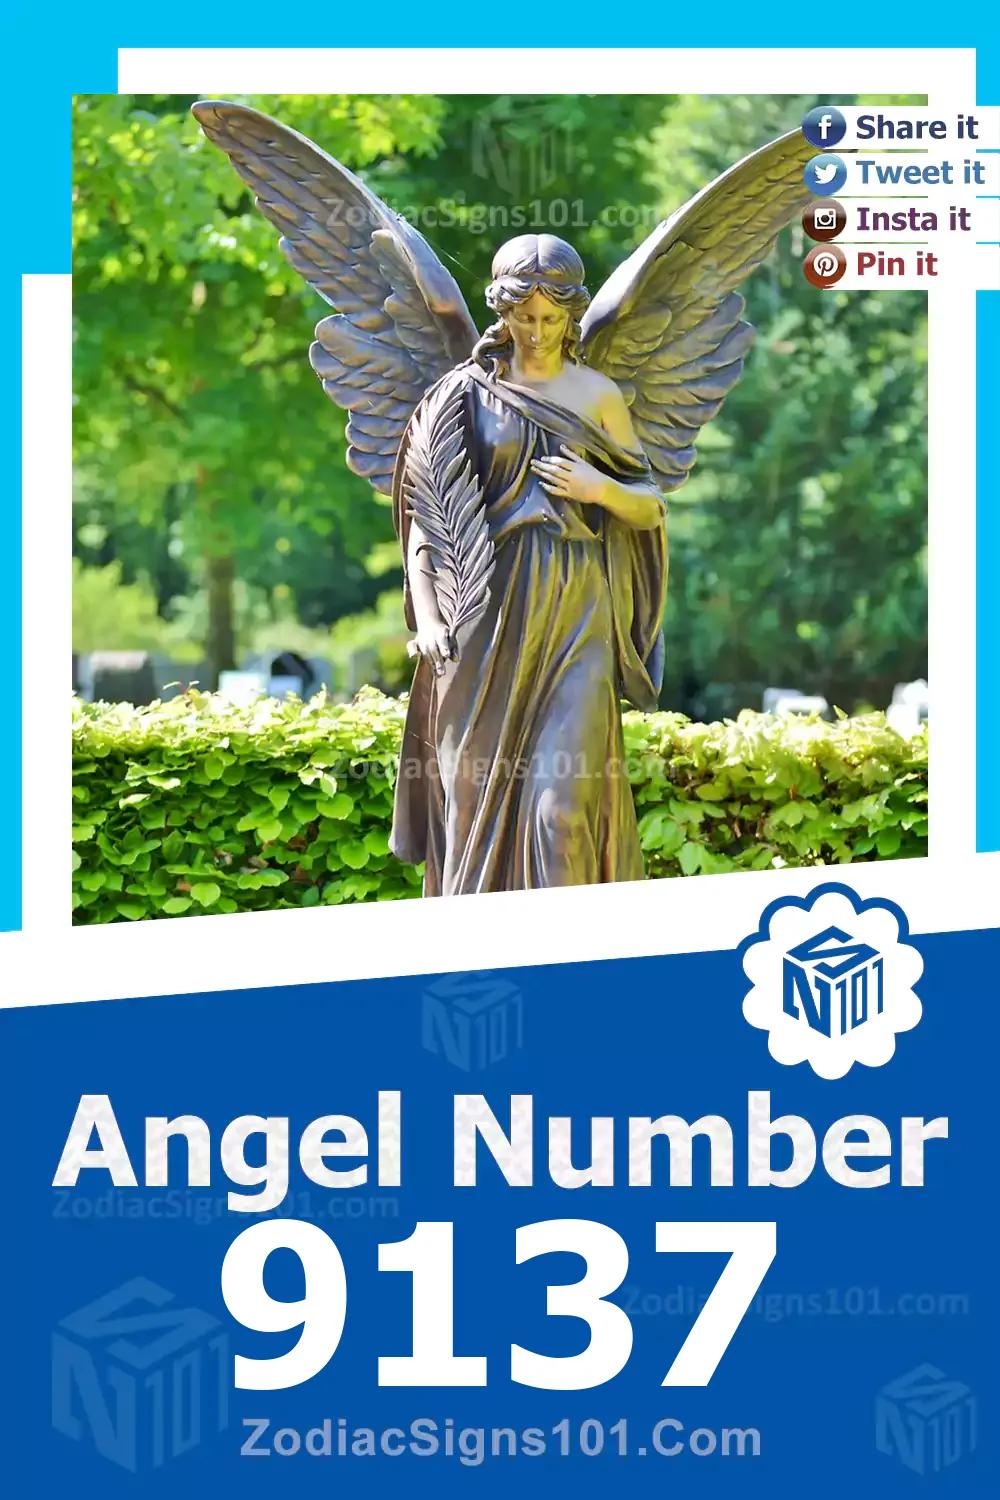 9137-Angel-Number-Meaning.jpg